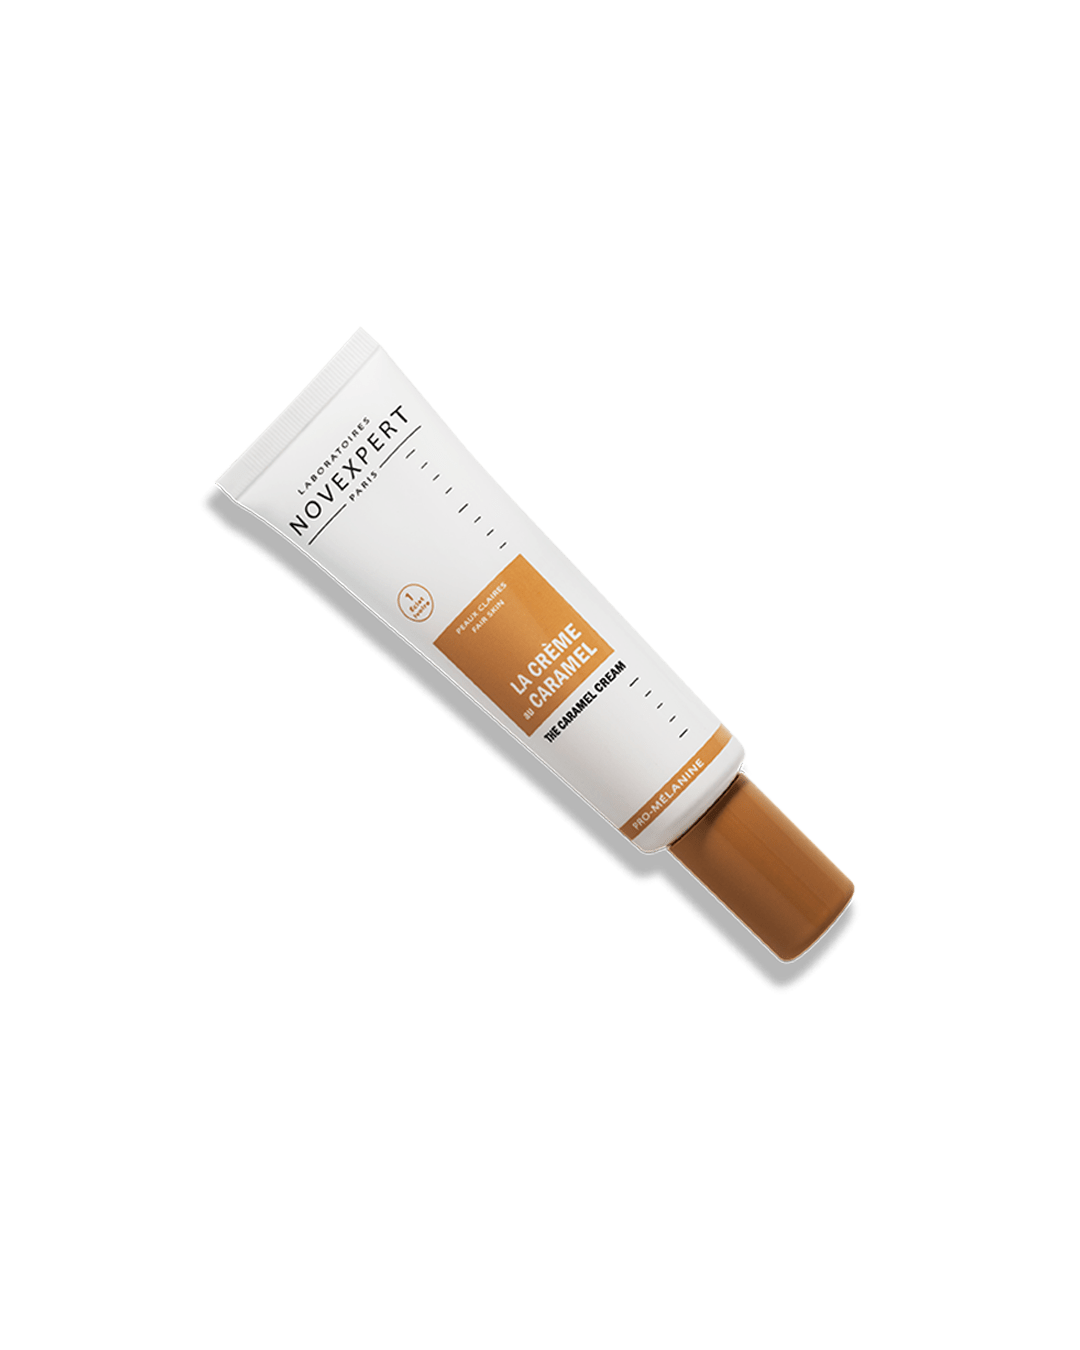 The Caramel Cream Fair Skin Ivory Radiance